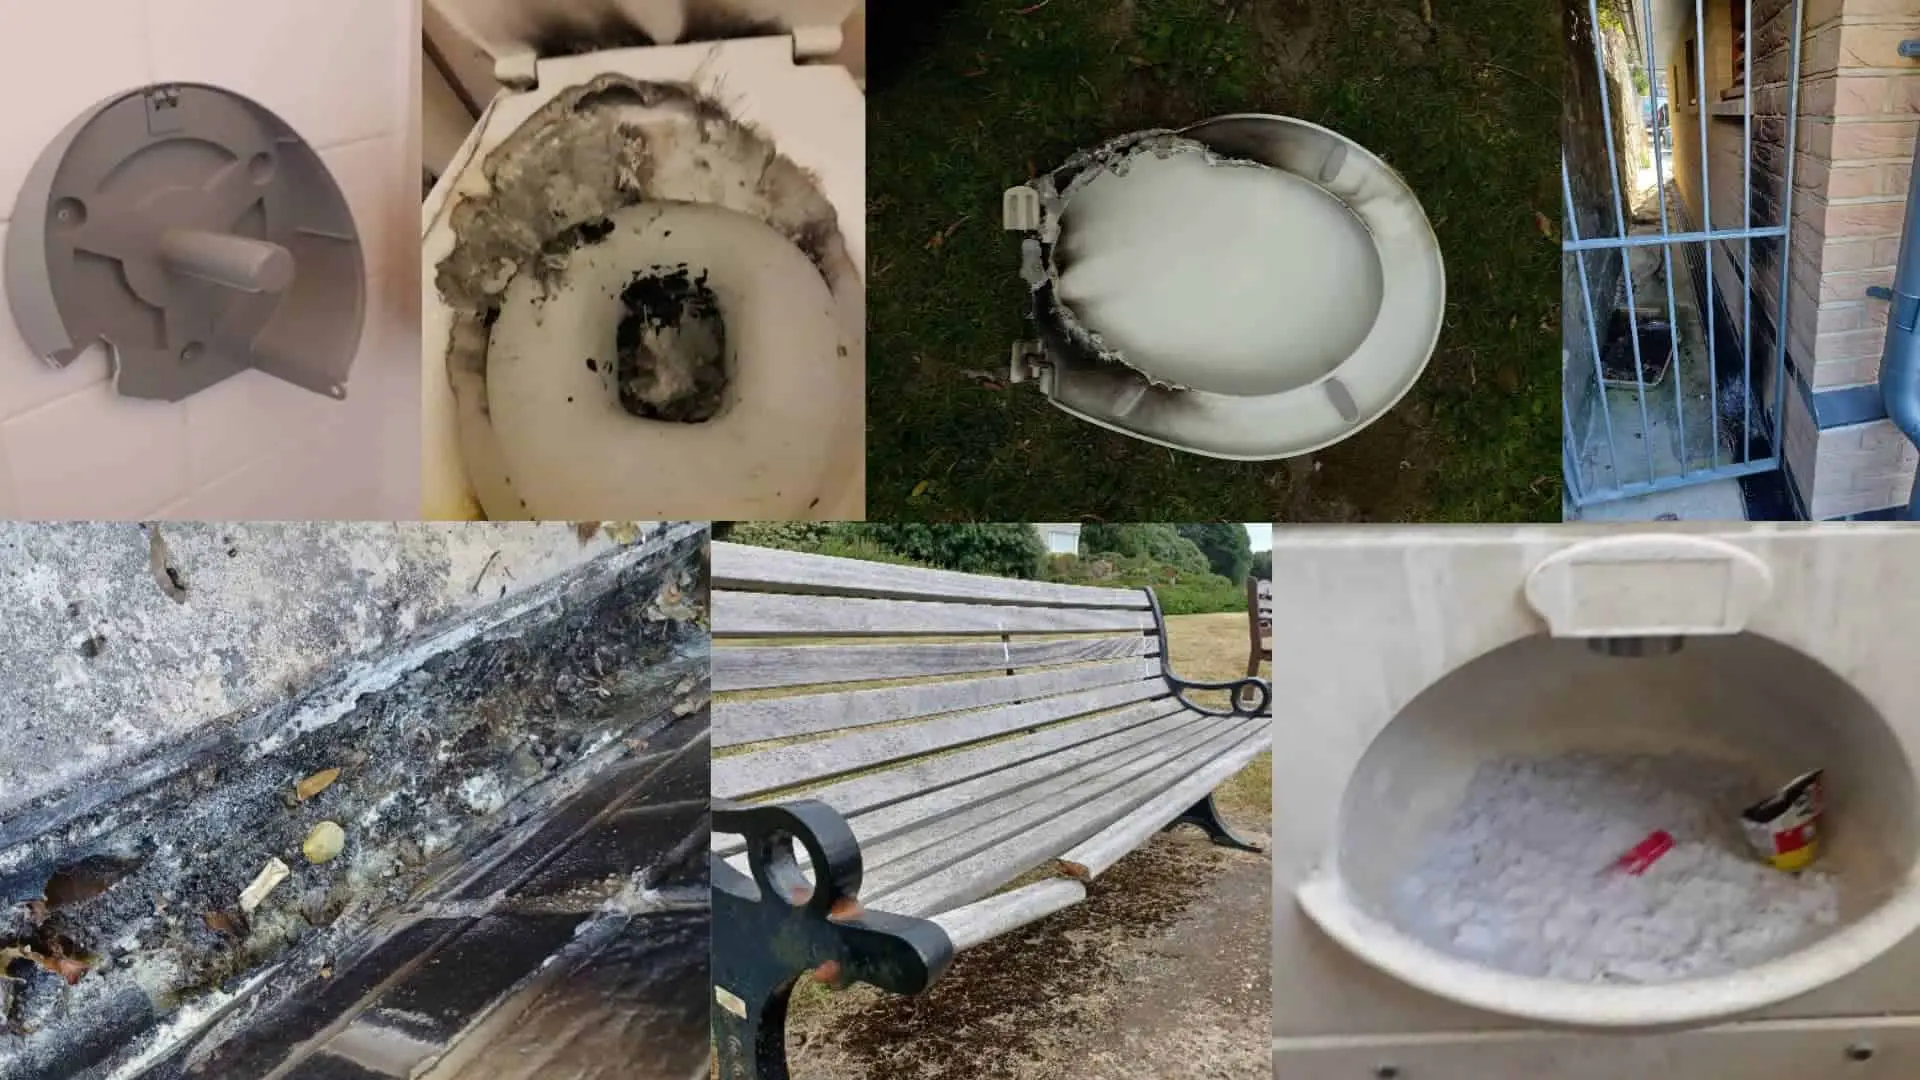 Montage of photos showing vandalism in Ventnor, broken toilets, damaged bench, fire damage etc